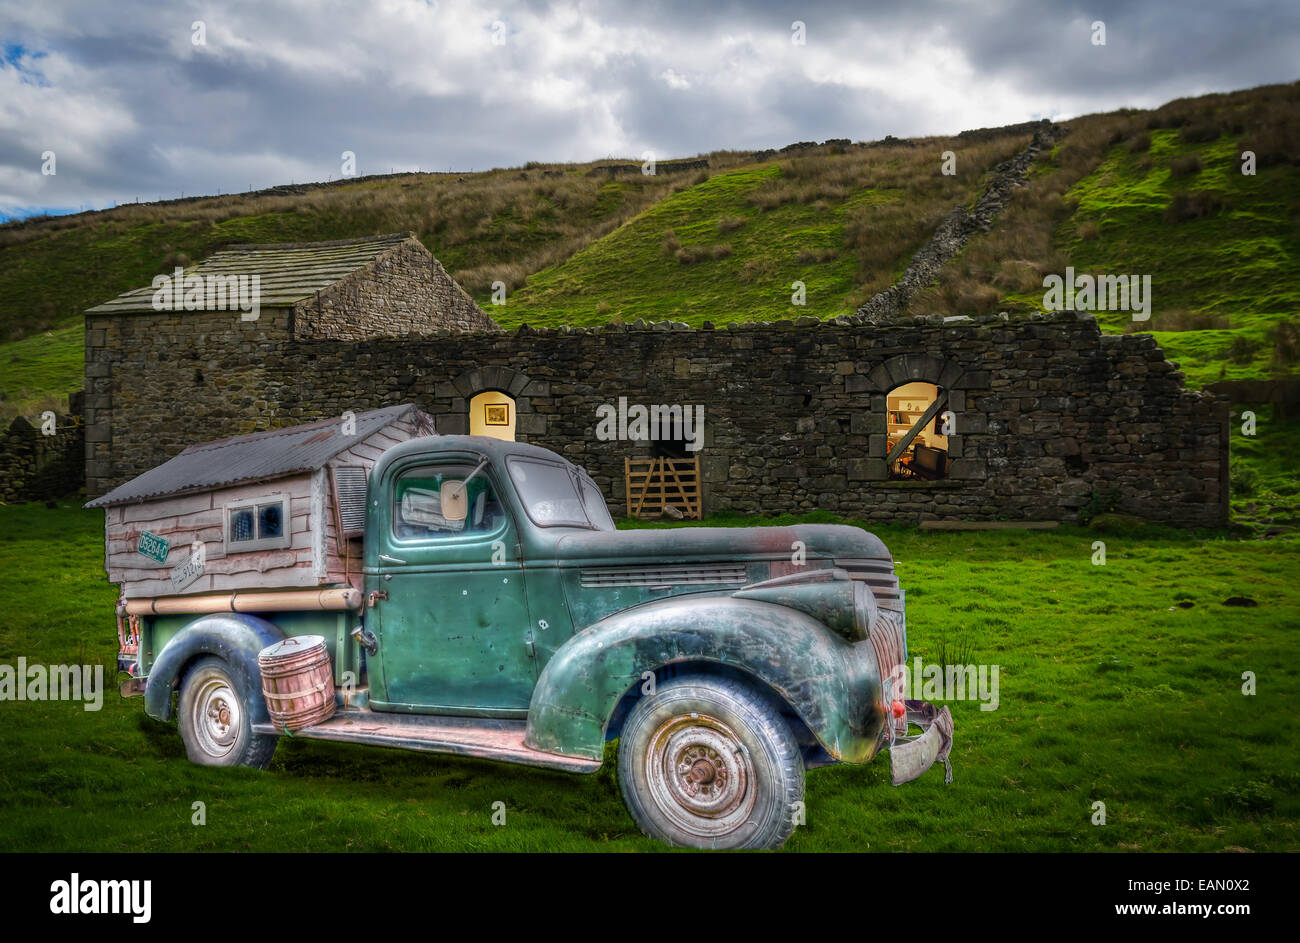 Oldtimer Wohnmobil - Hillbilly-Stil Stockfoto